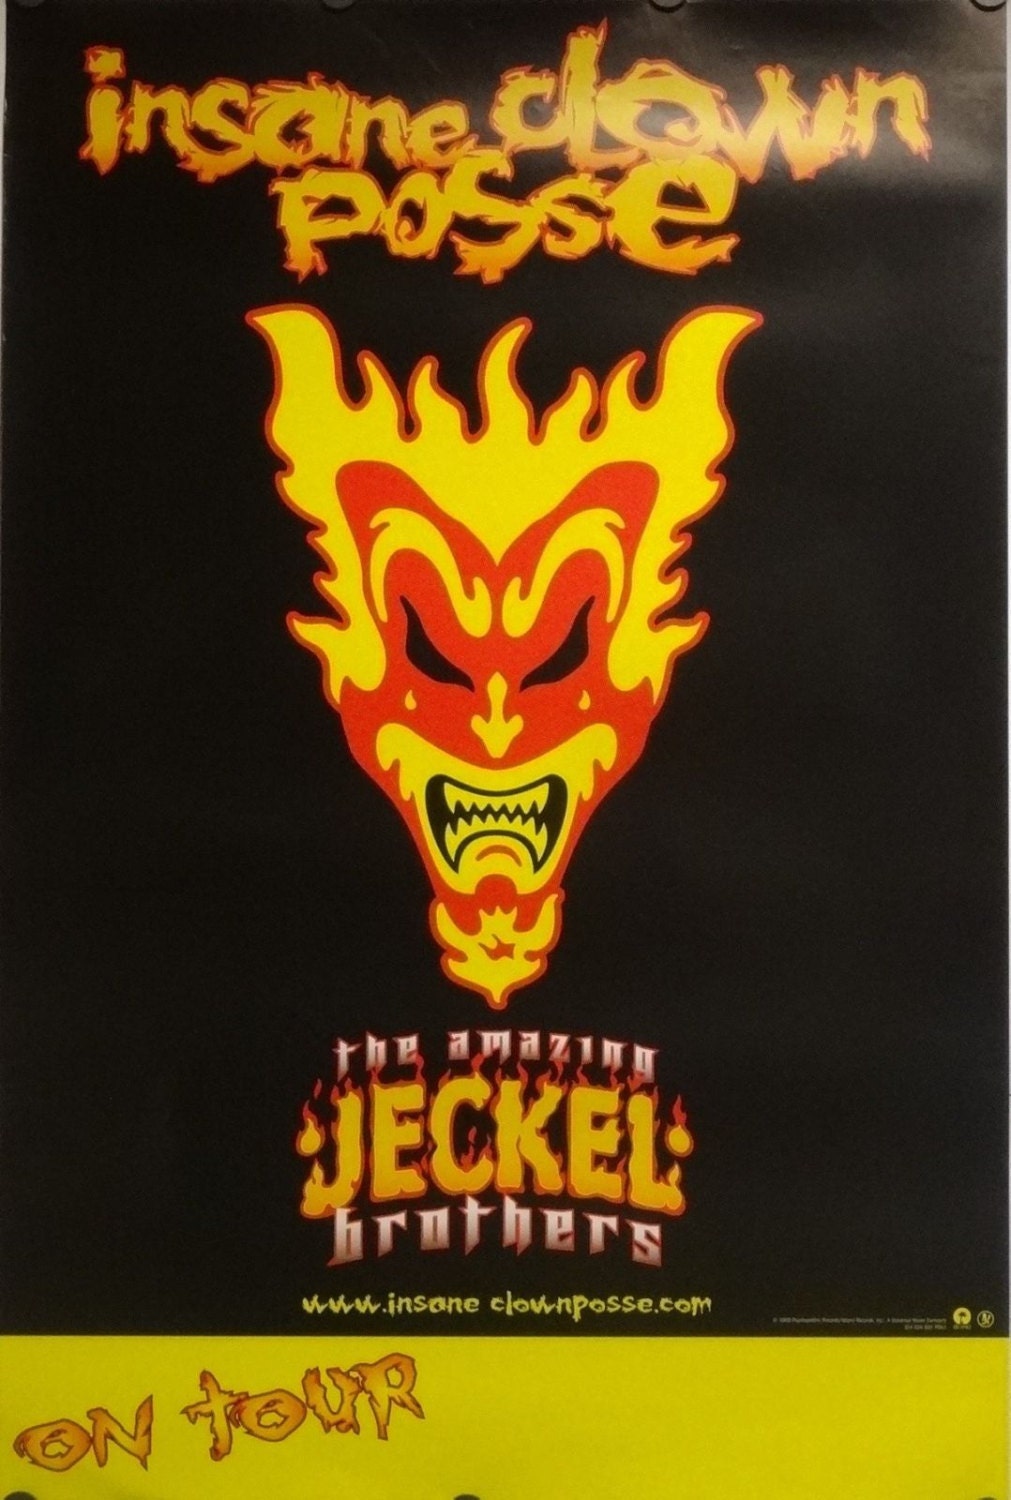 Insane Clown Posse X Amazing Jeckel Bros Promo Poster ICP